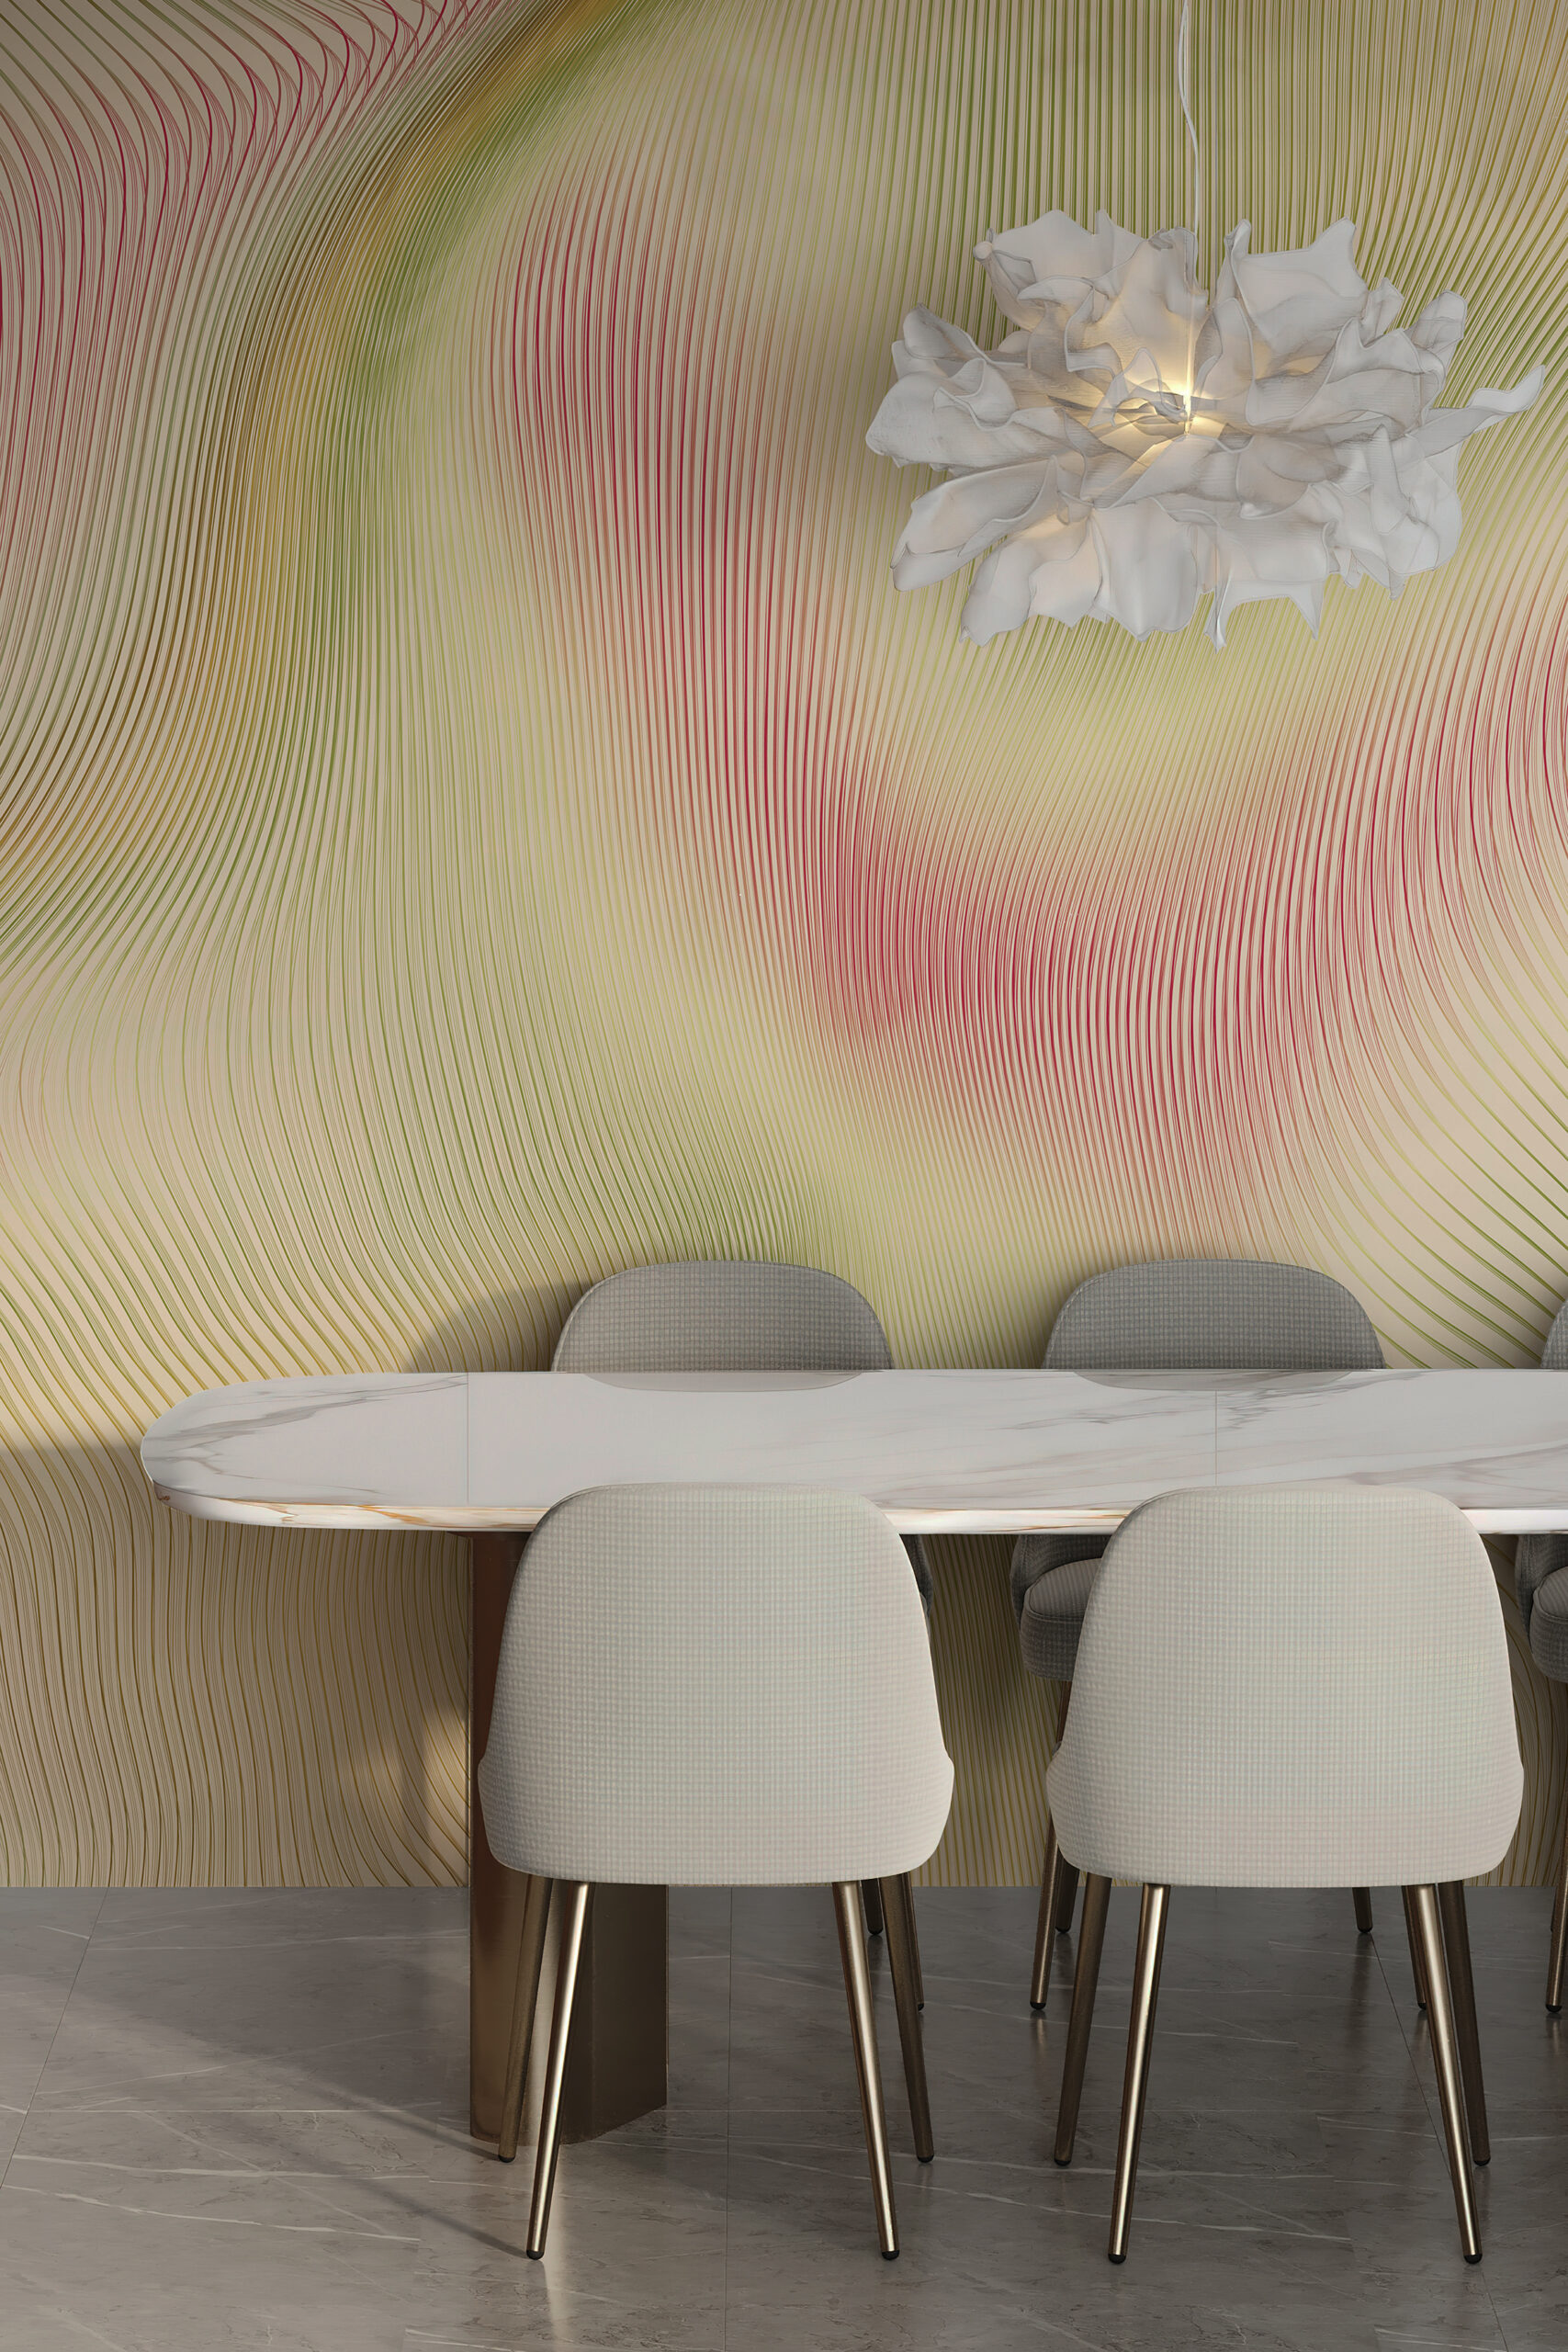 Interferenze-Lime-MaVoix-wallpaper-by-Studio-Lievito-pattern-Collezione-Racconti-dining-room